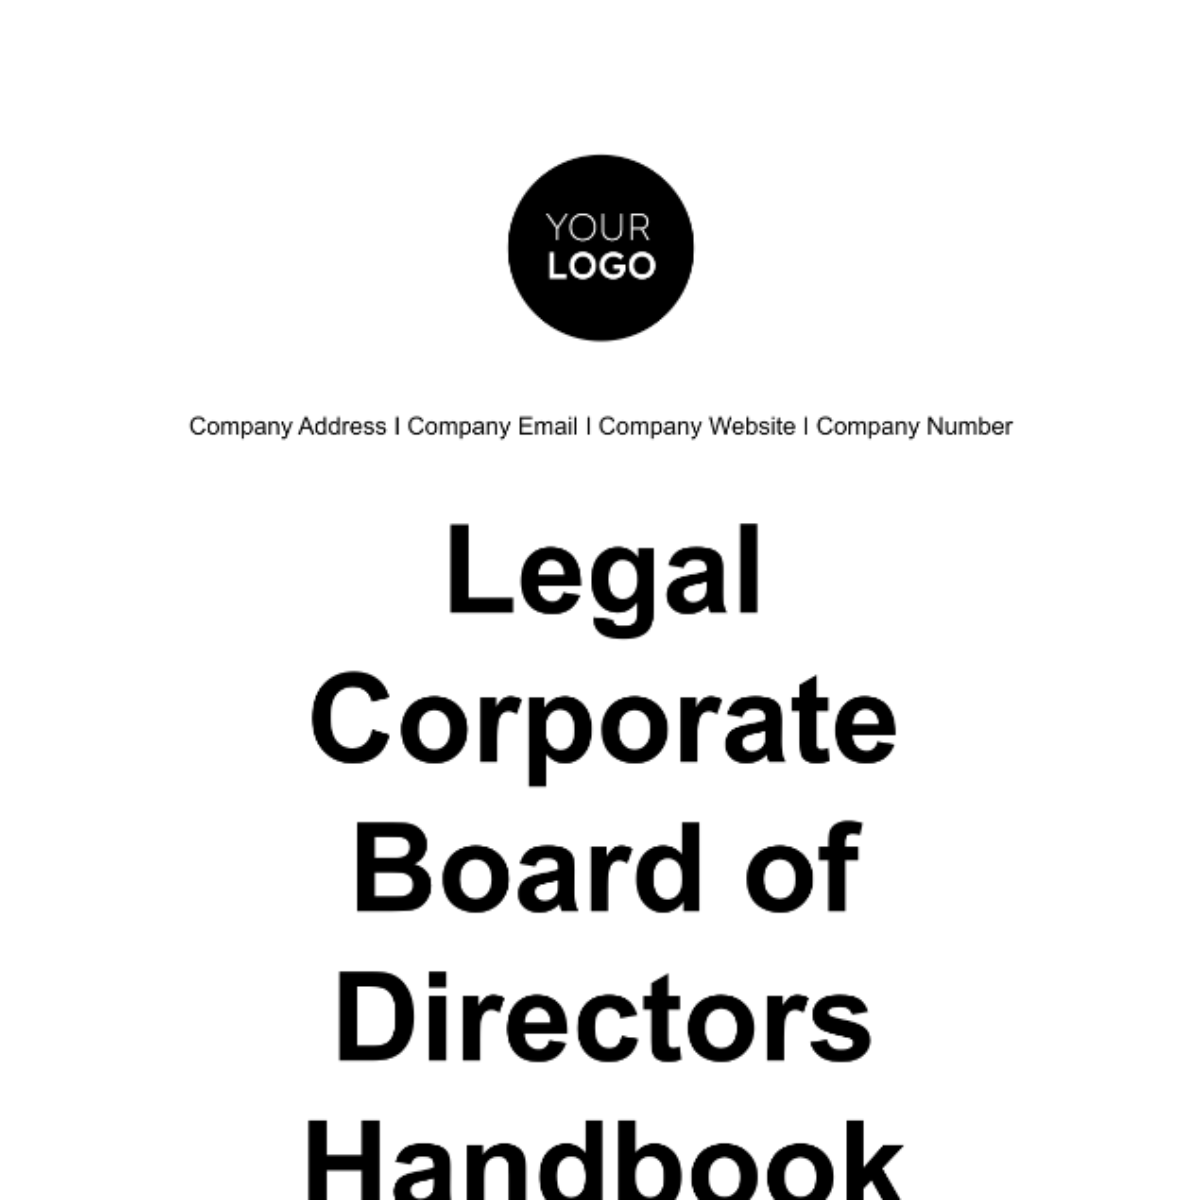 Legal Corporate Board of Directors Handbook Template